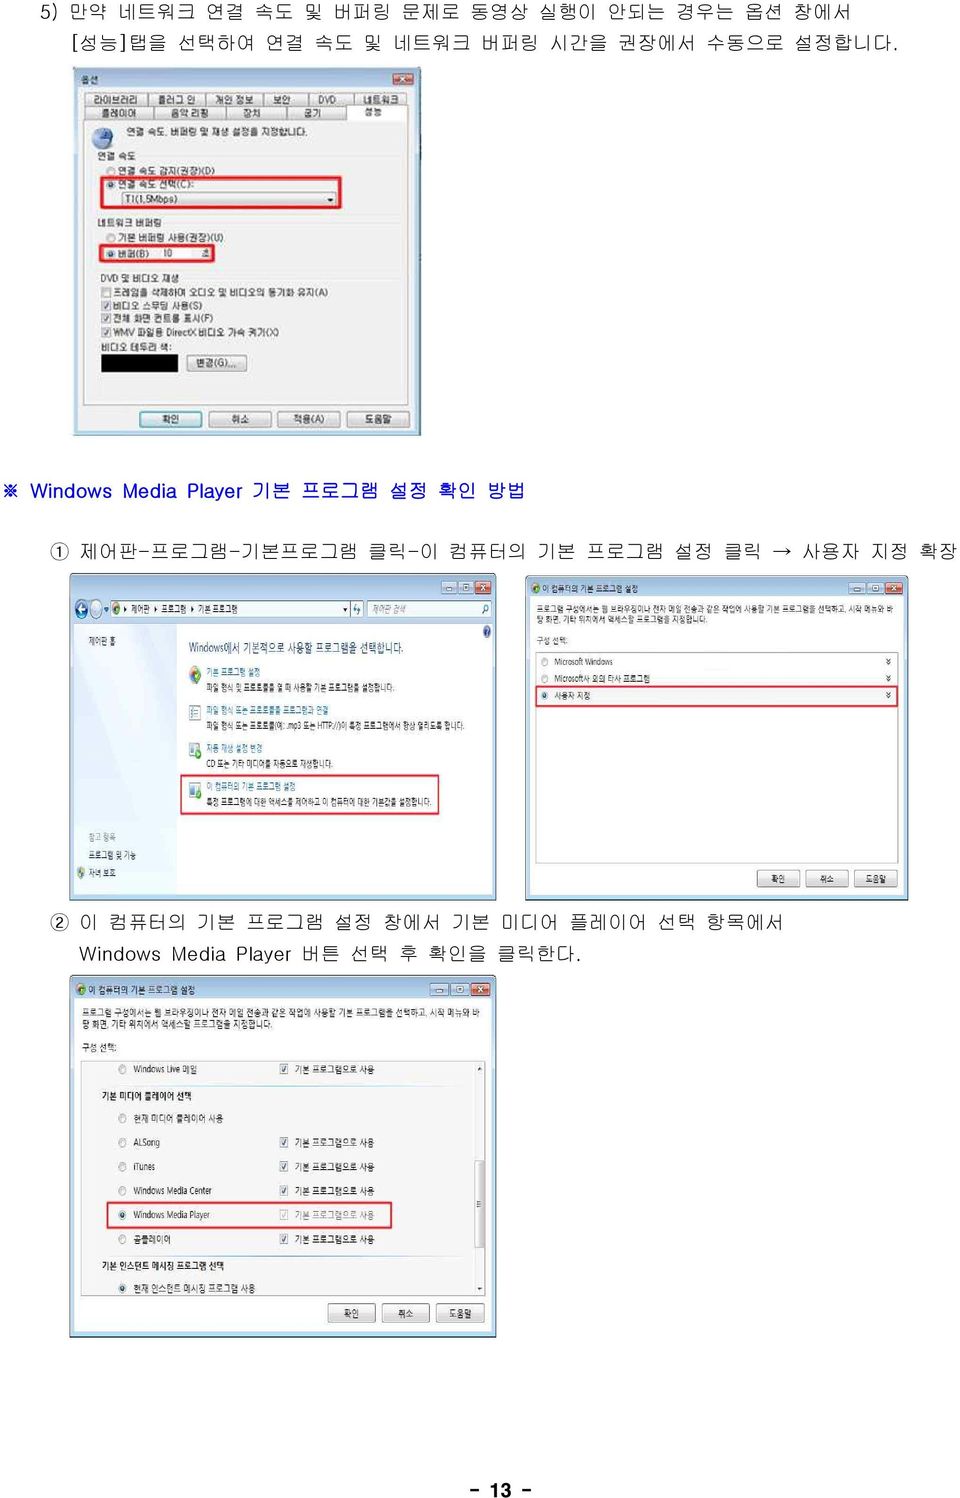 Windows Media Player 기본 프로그램 설정 확인 방법 1 제어판-프로그램-기본프로그램 클릭-이 컴퓨터의 기본